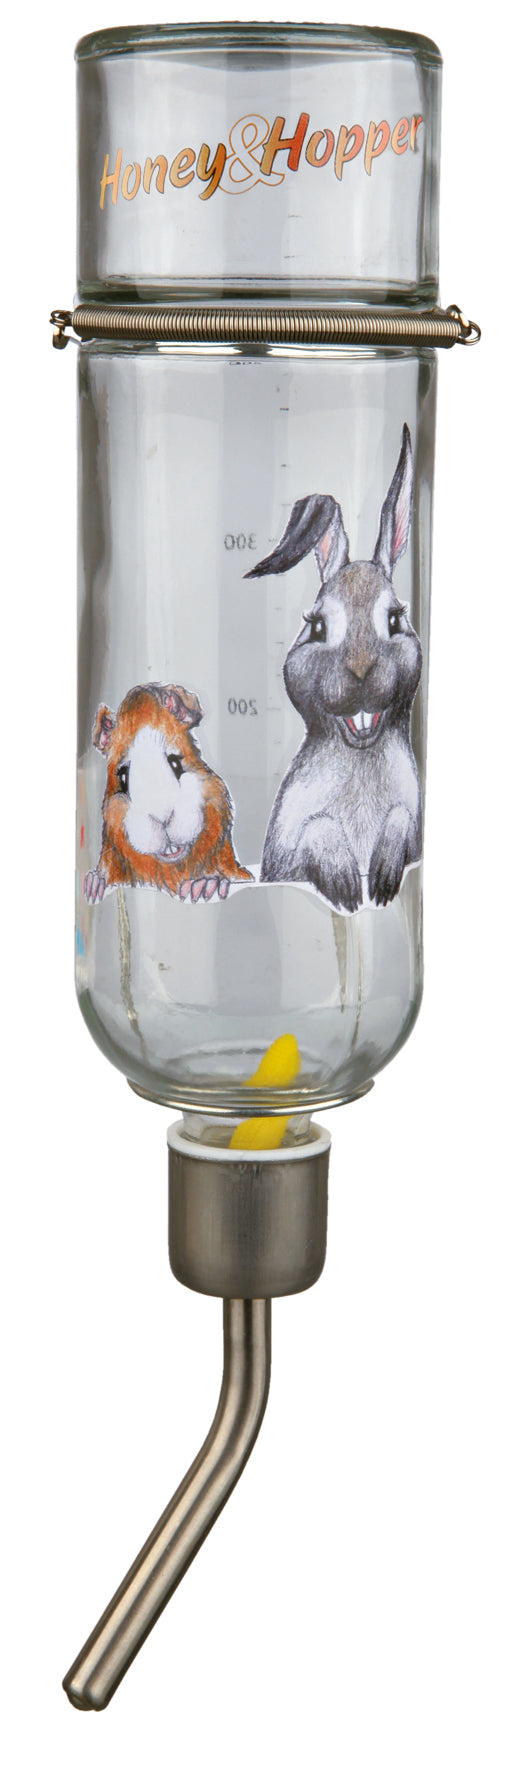 Trixie - Honey & Hopper drikkeflaske, Glas, 500 ml